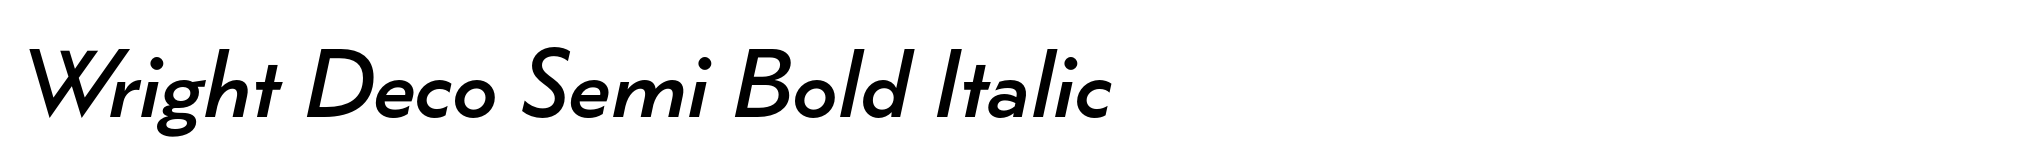 Wright Deco Semi Bold Italic image